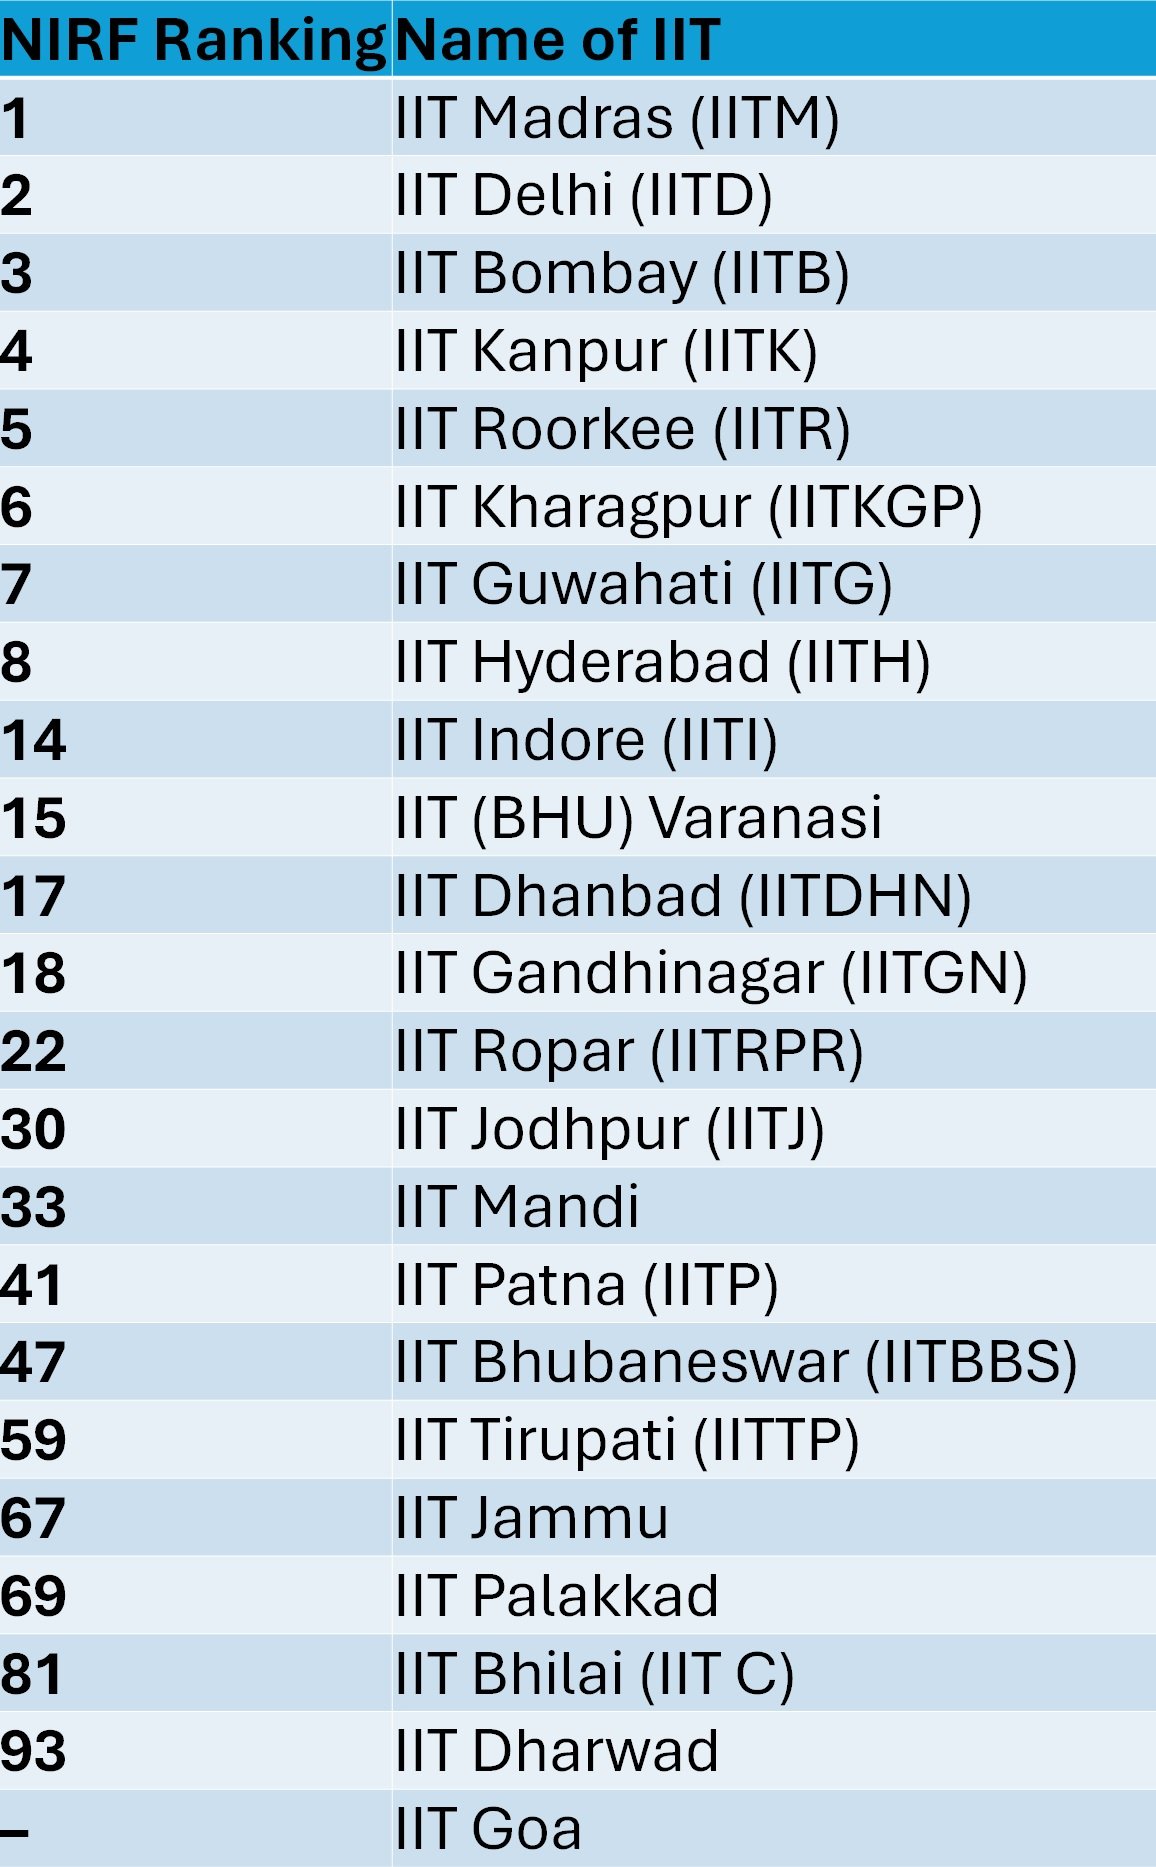 Top IITs based on NIRF Ranking 2023